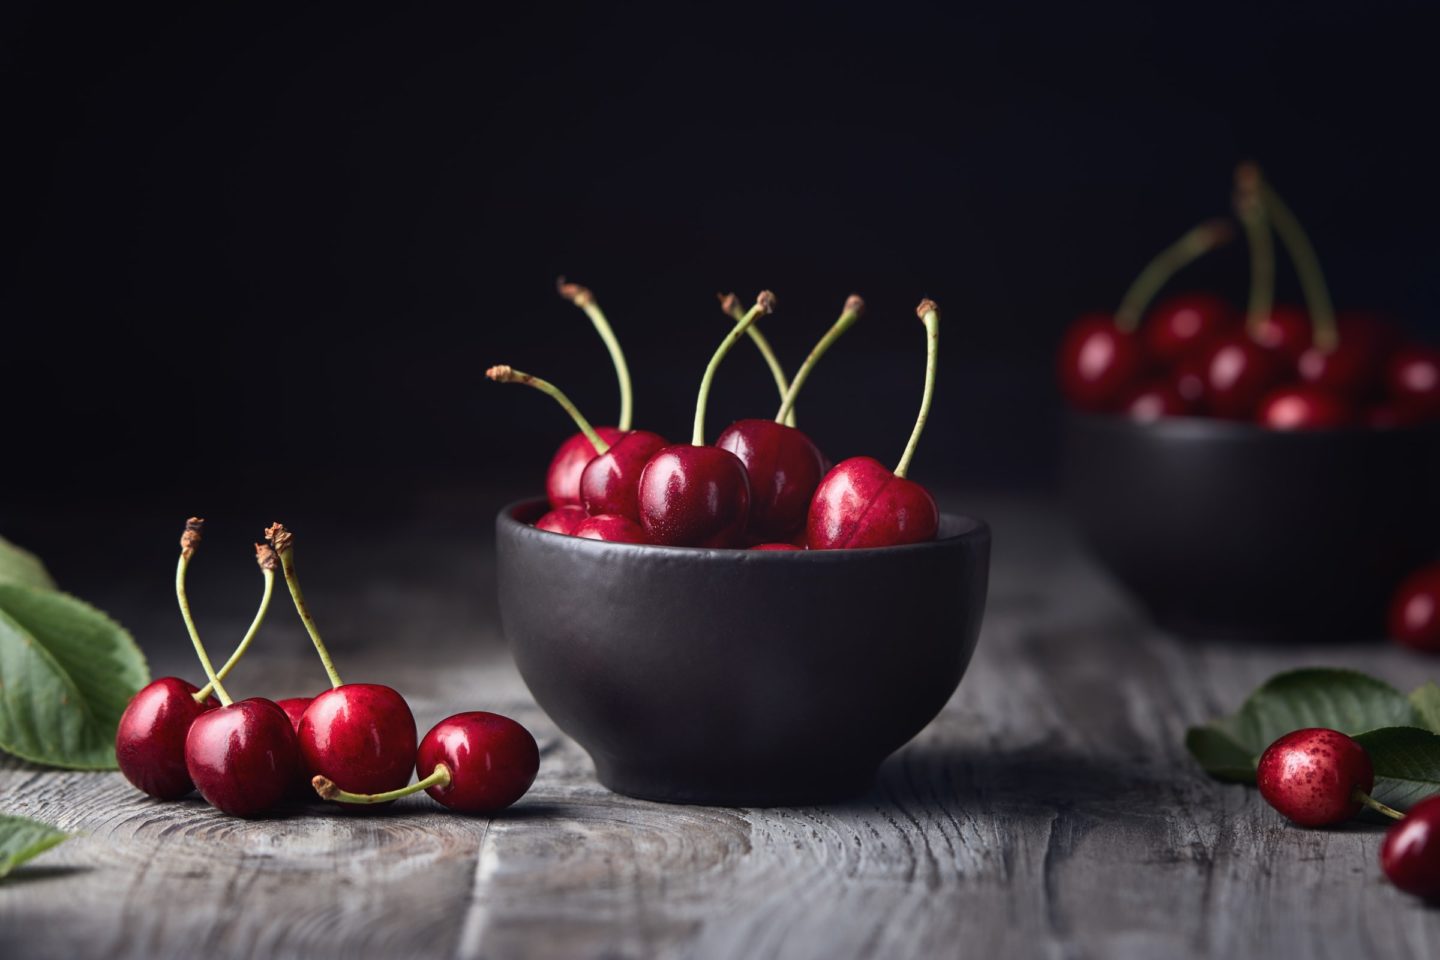 tart red cherry juice is rich in antioxidants